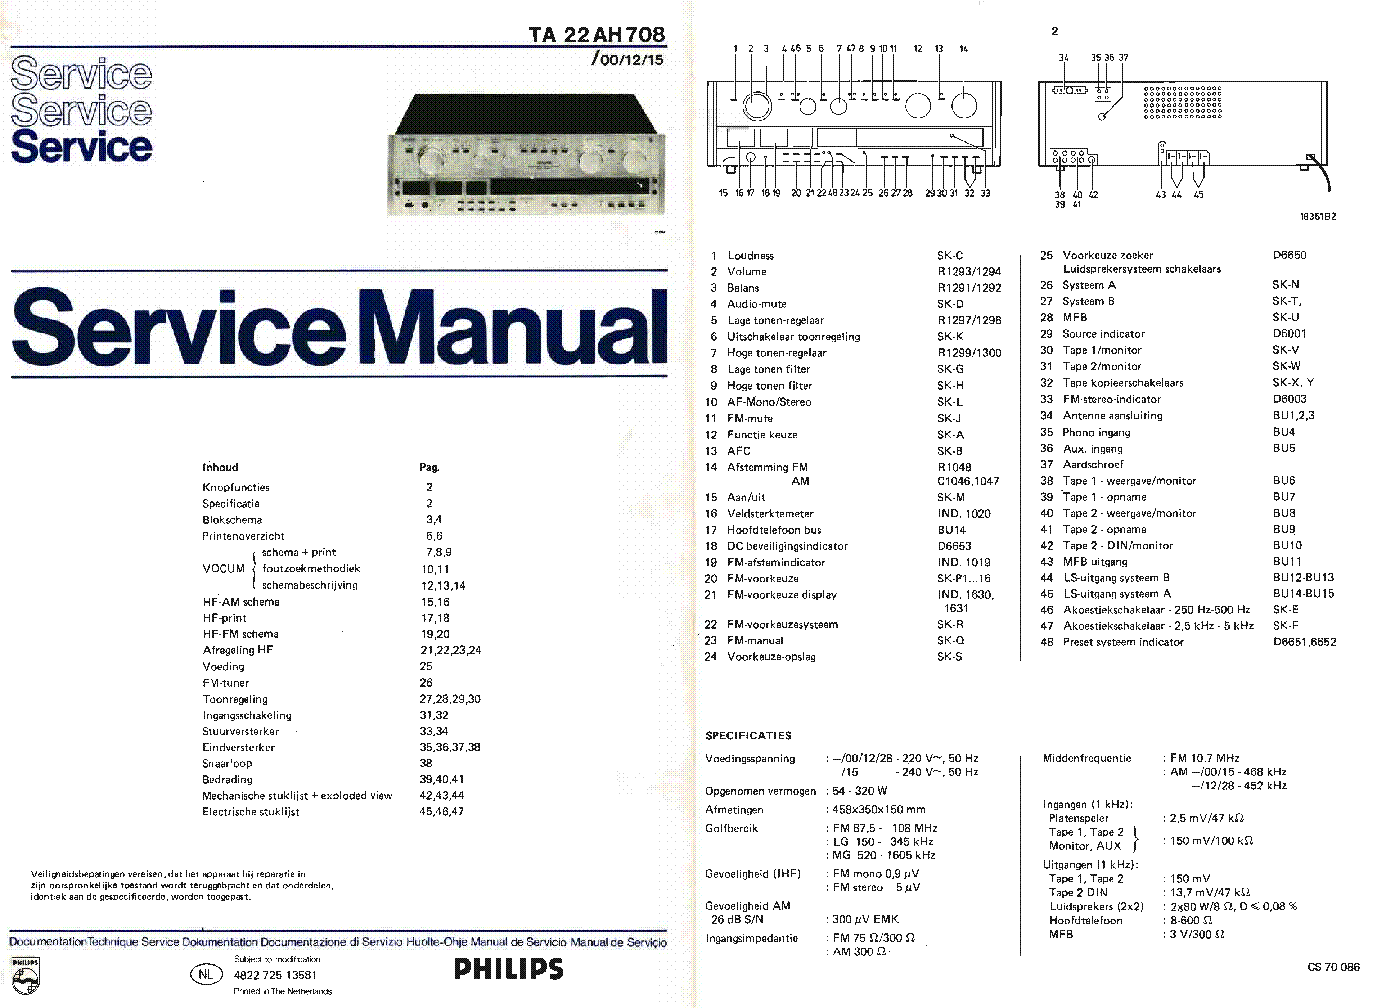 Service Manual-Anleitung für Philips 22 AH 578 